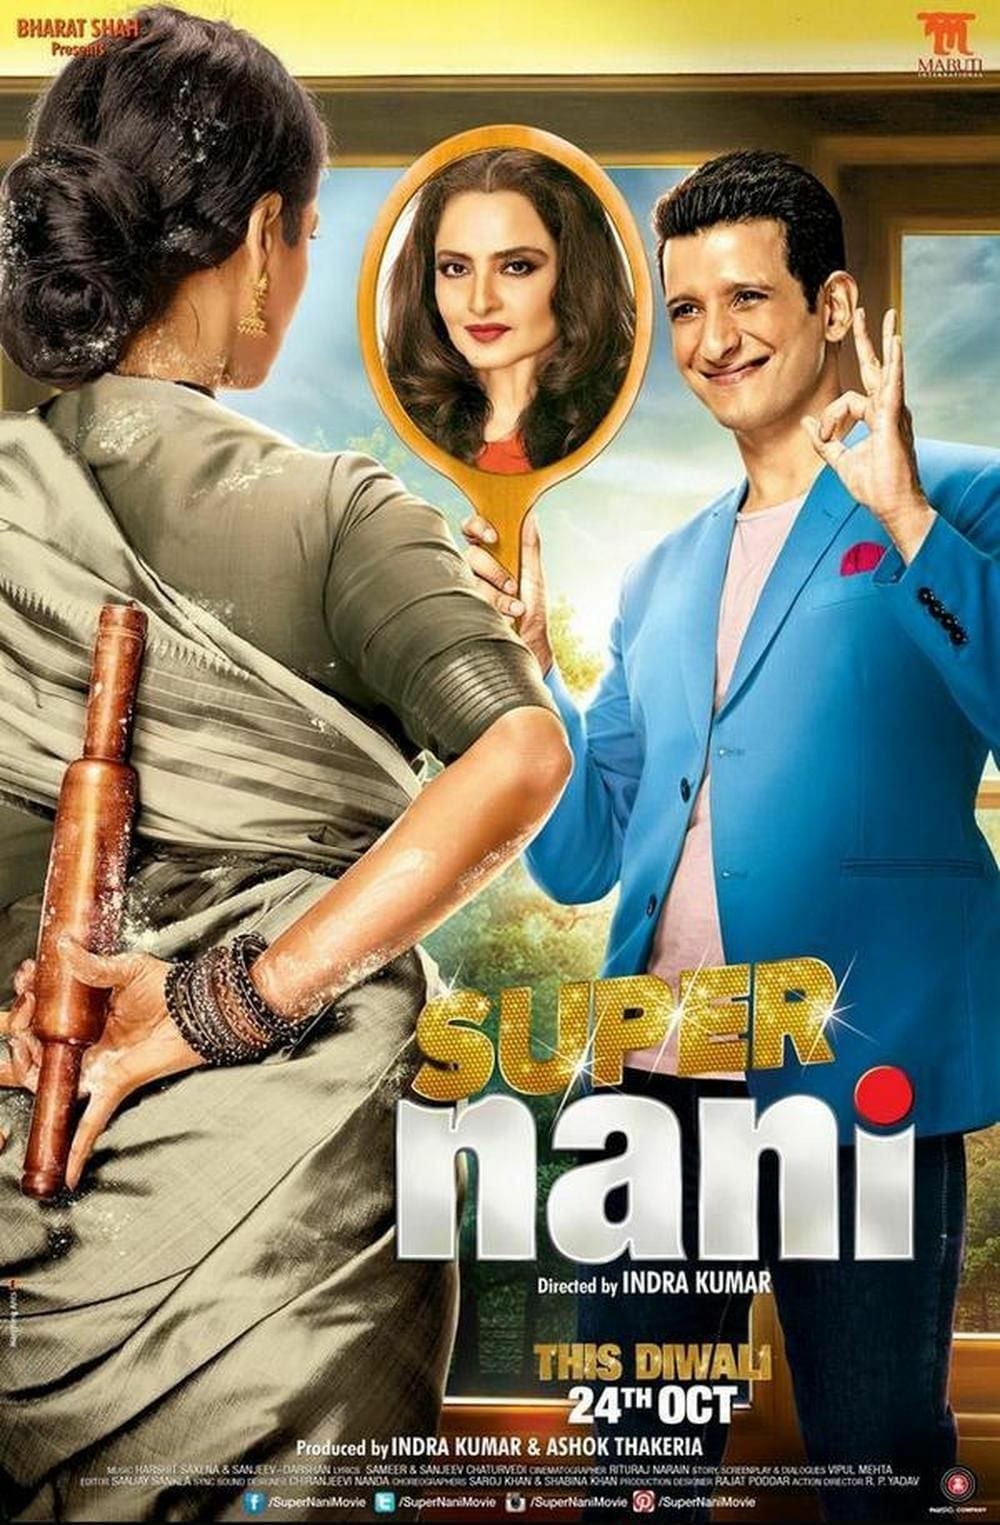 Poster for the movie "Super Nani"